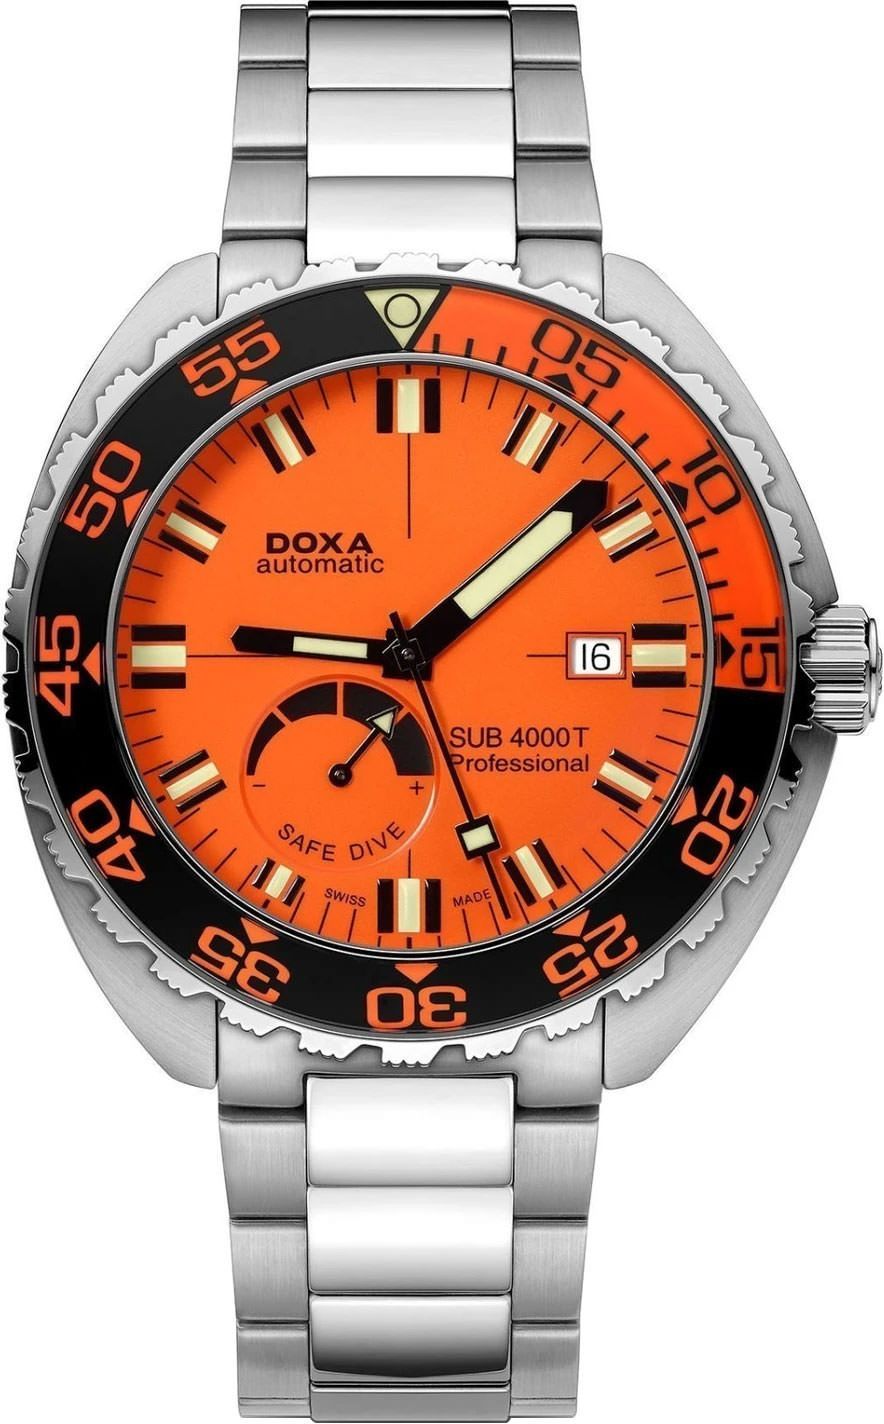 Doxa SUB 4000T Professional Sapphire Bezel Orange Dial 47.5 mm Automatic Watch For Men - 1